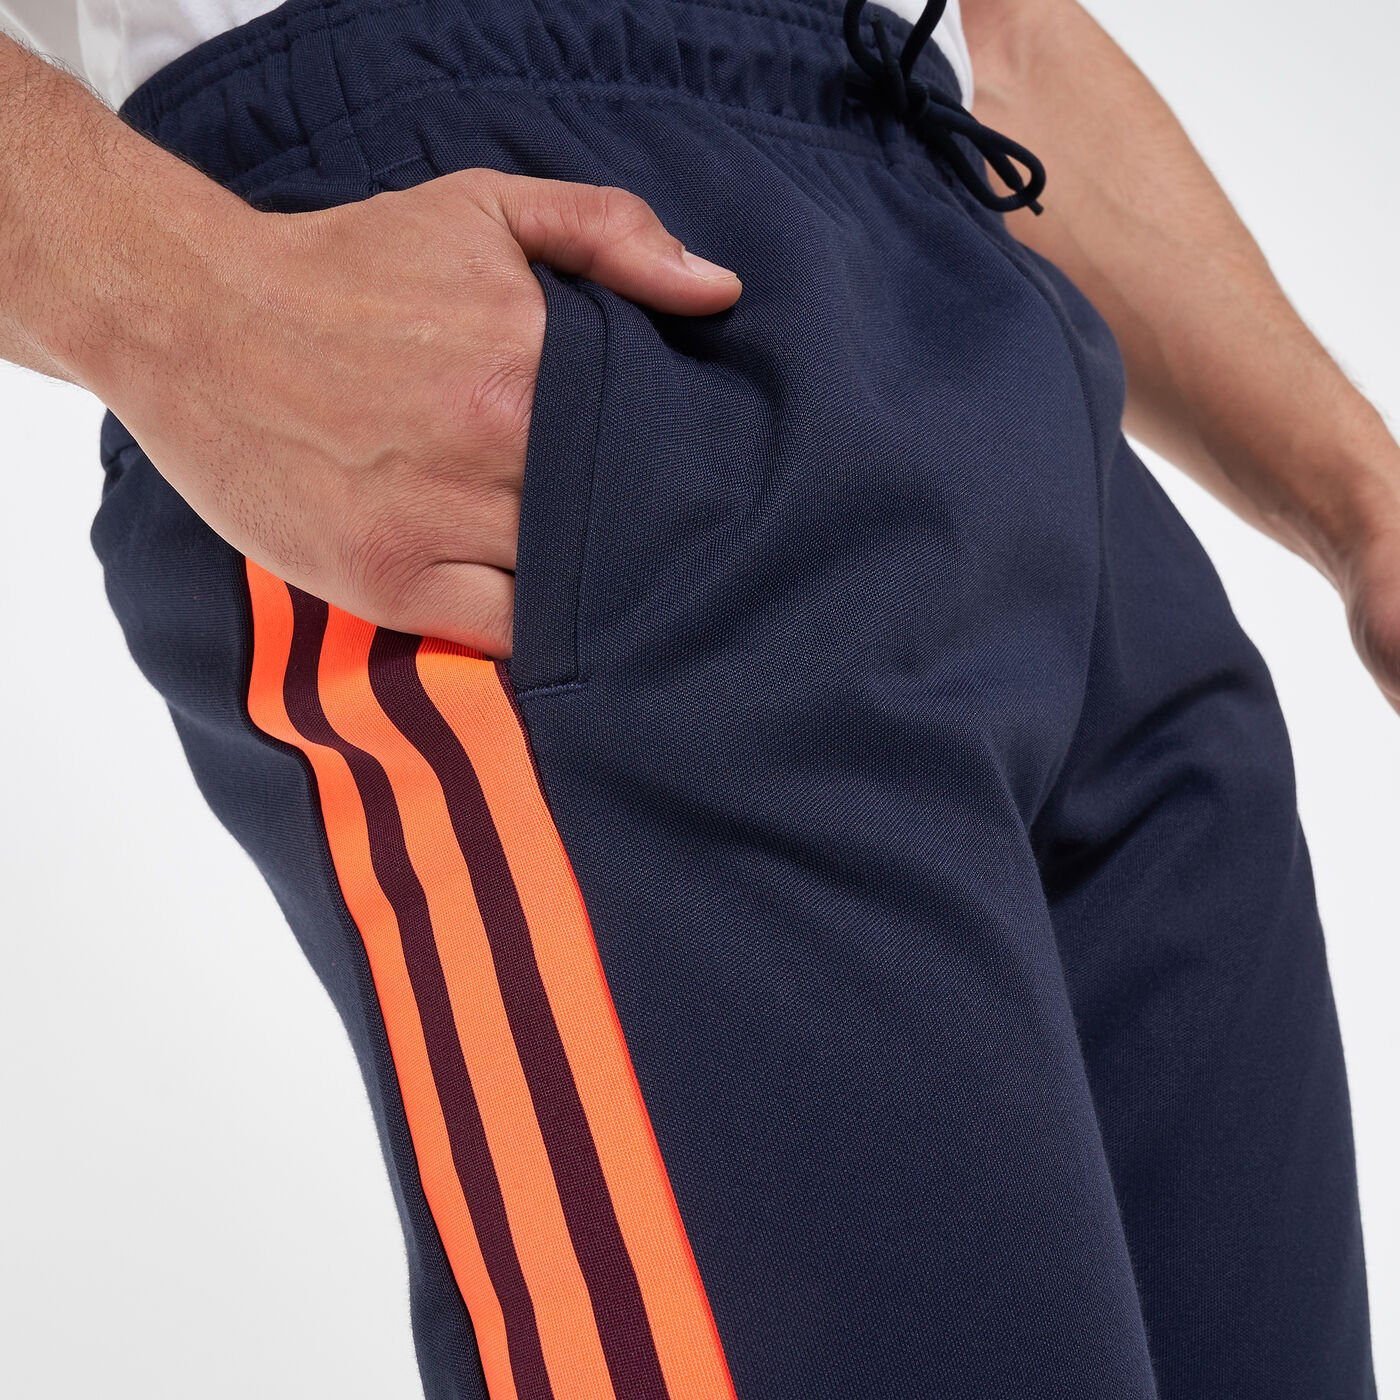 Men's 3-Stripes Sweatpants